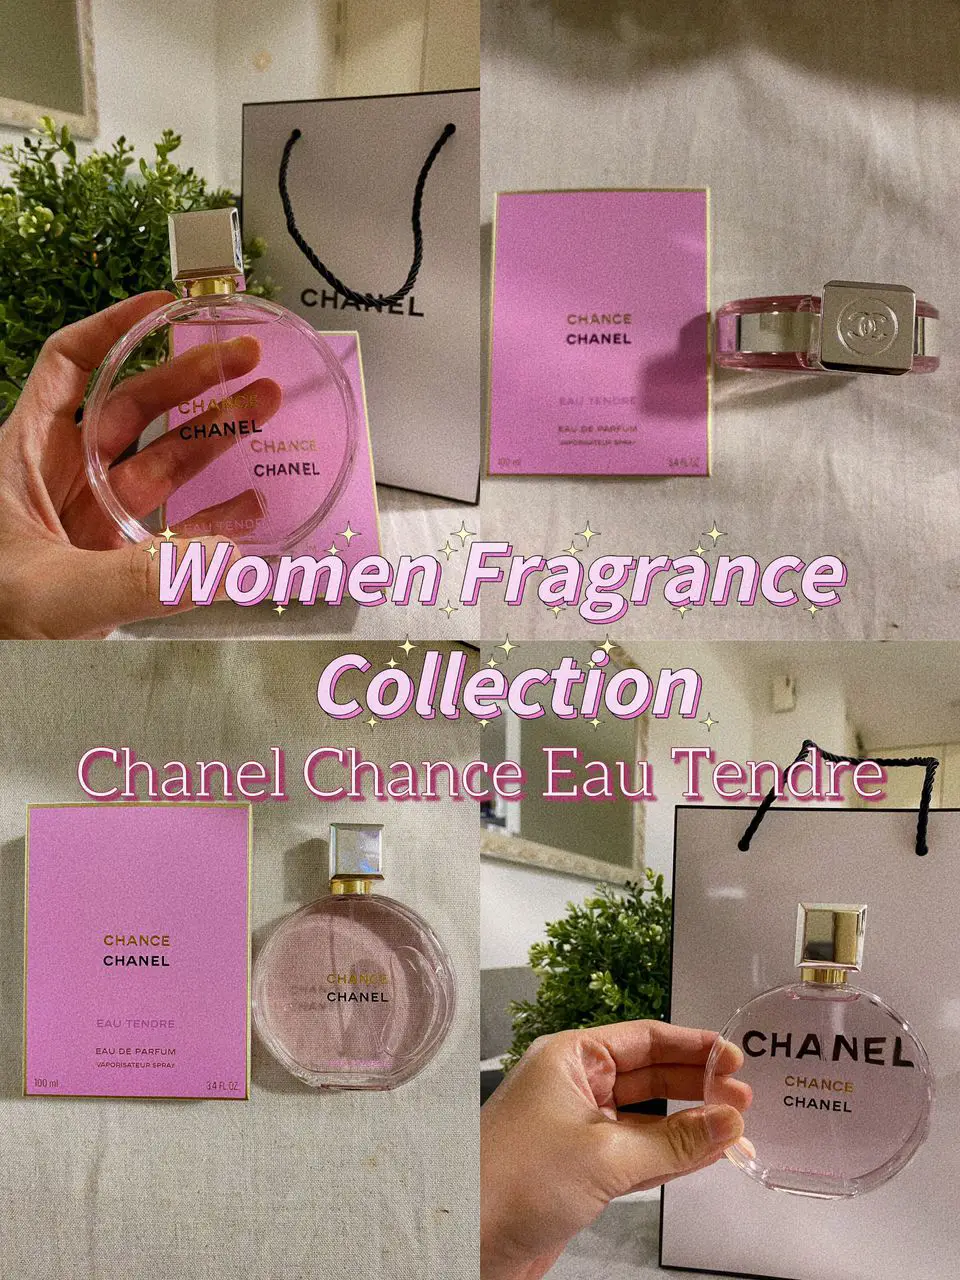 Woman fragrance collection chanel!, Galeri disiarkan oleh Syamira Azhar